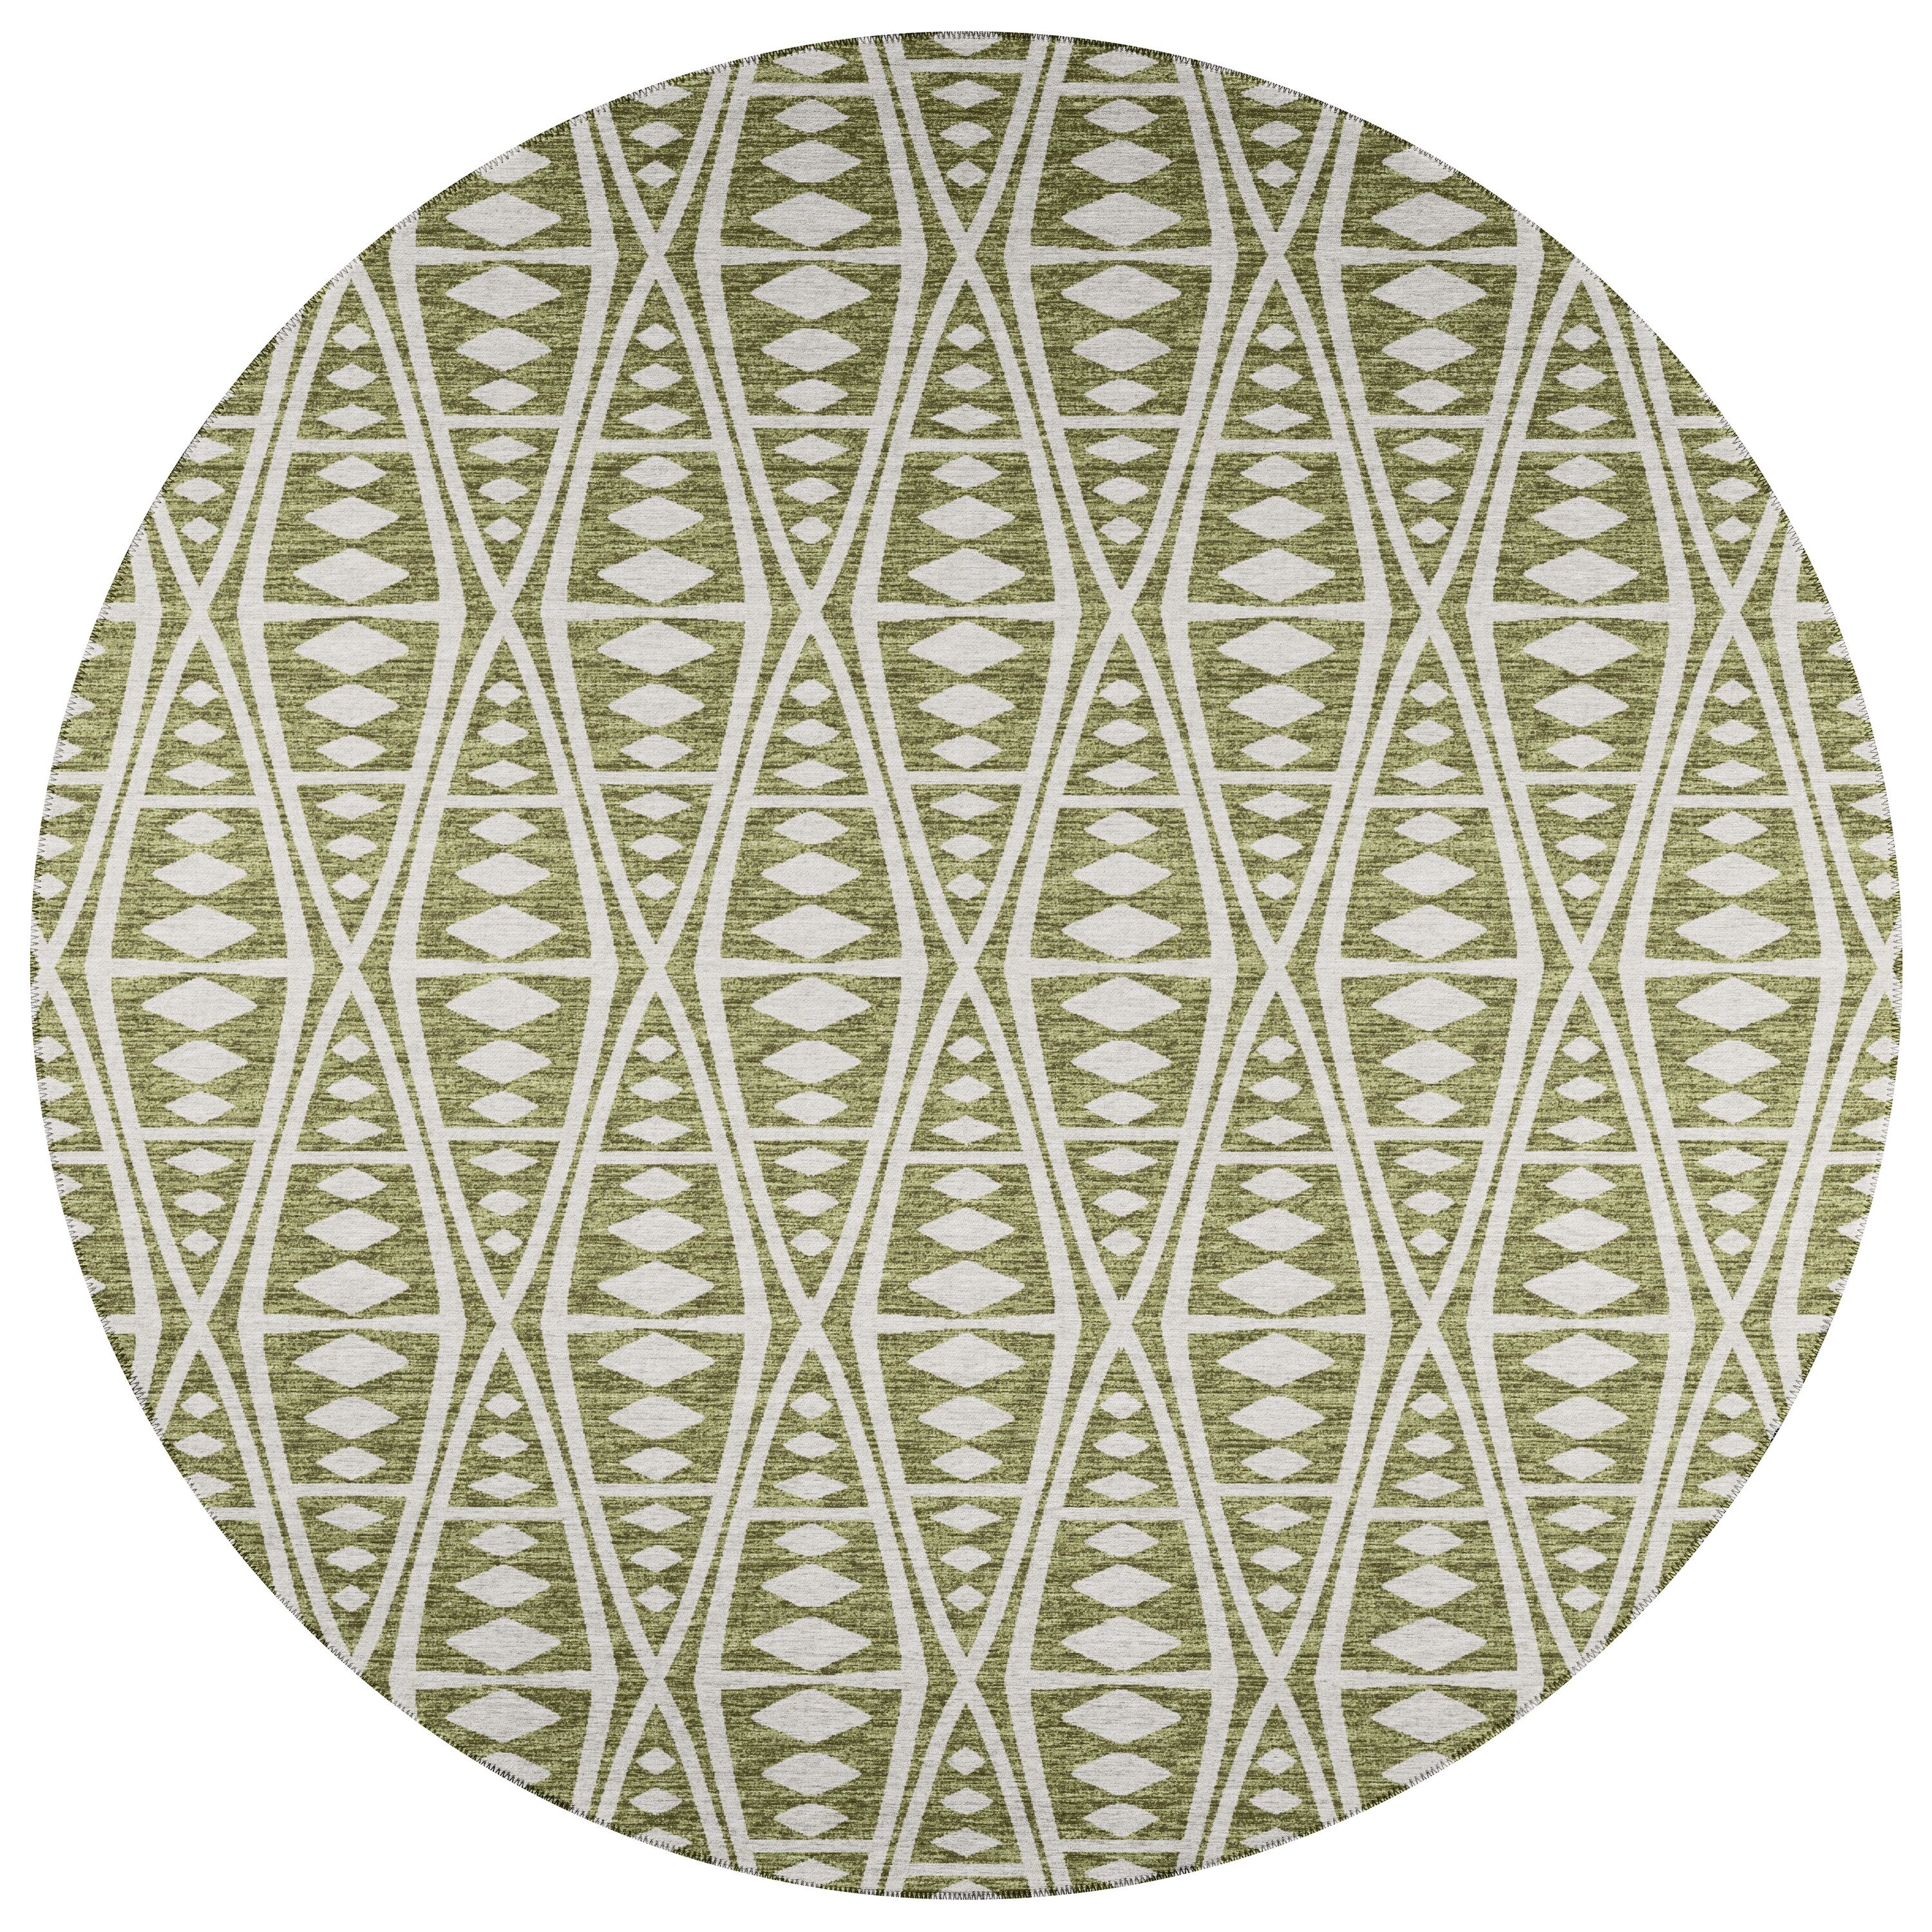 Simple Modern Ravenna - Straight Stitch Designs